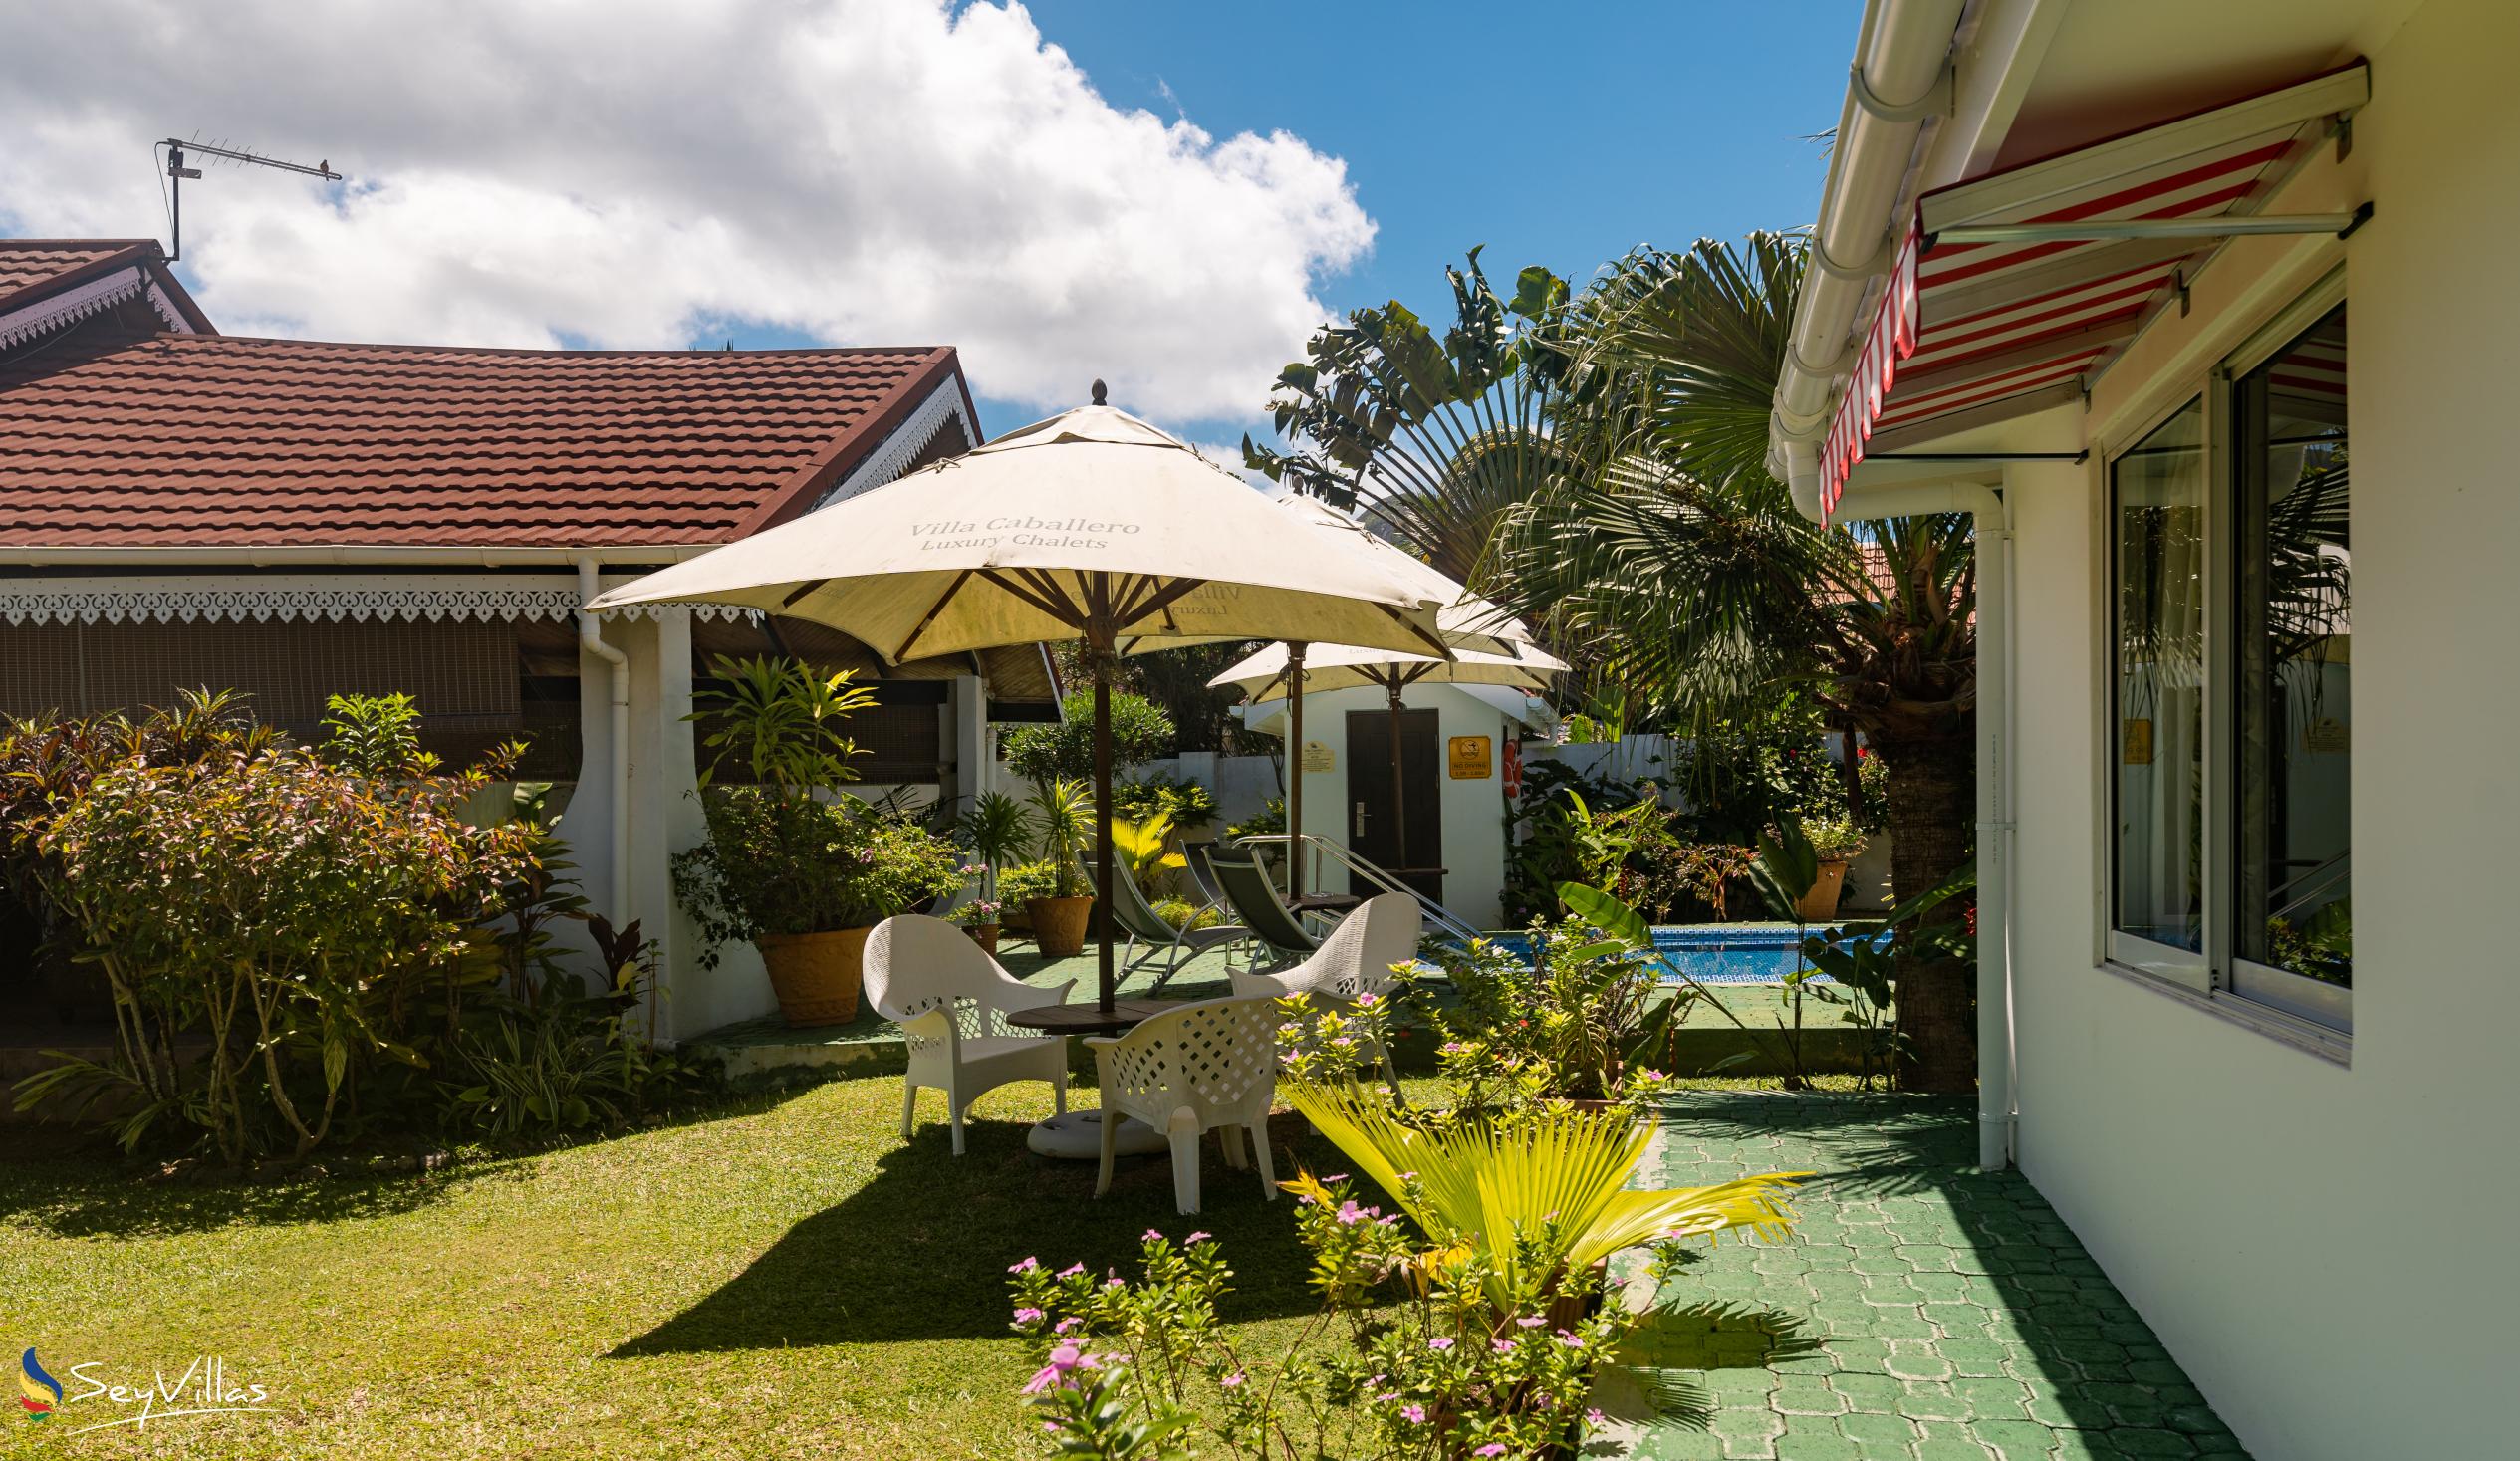 Photo 11: Villa Caballero - Outdoor area - Mahé (Seychelles)